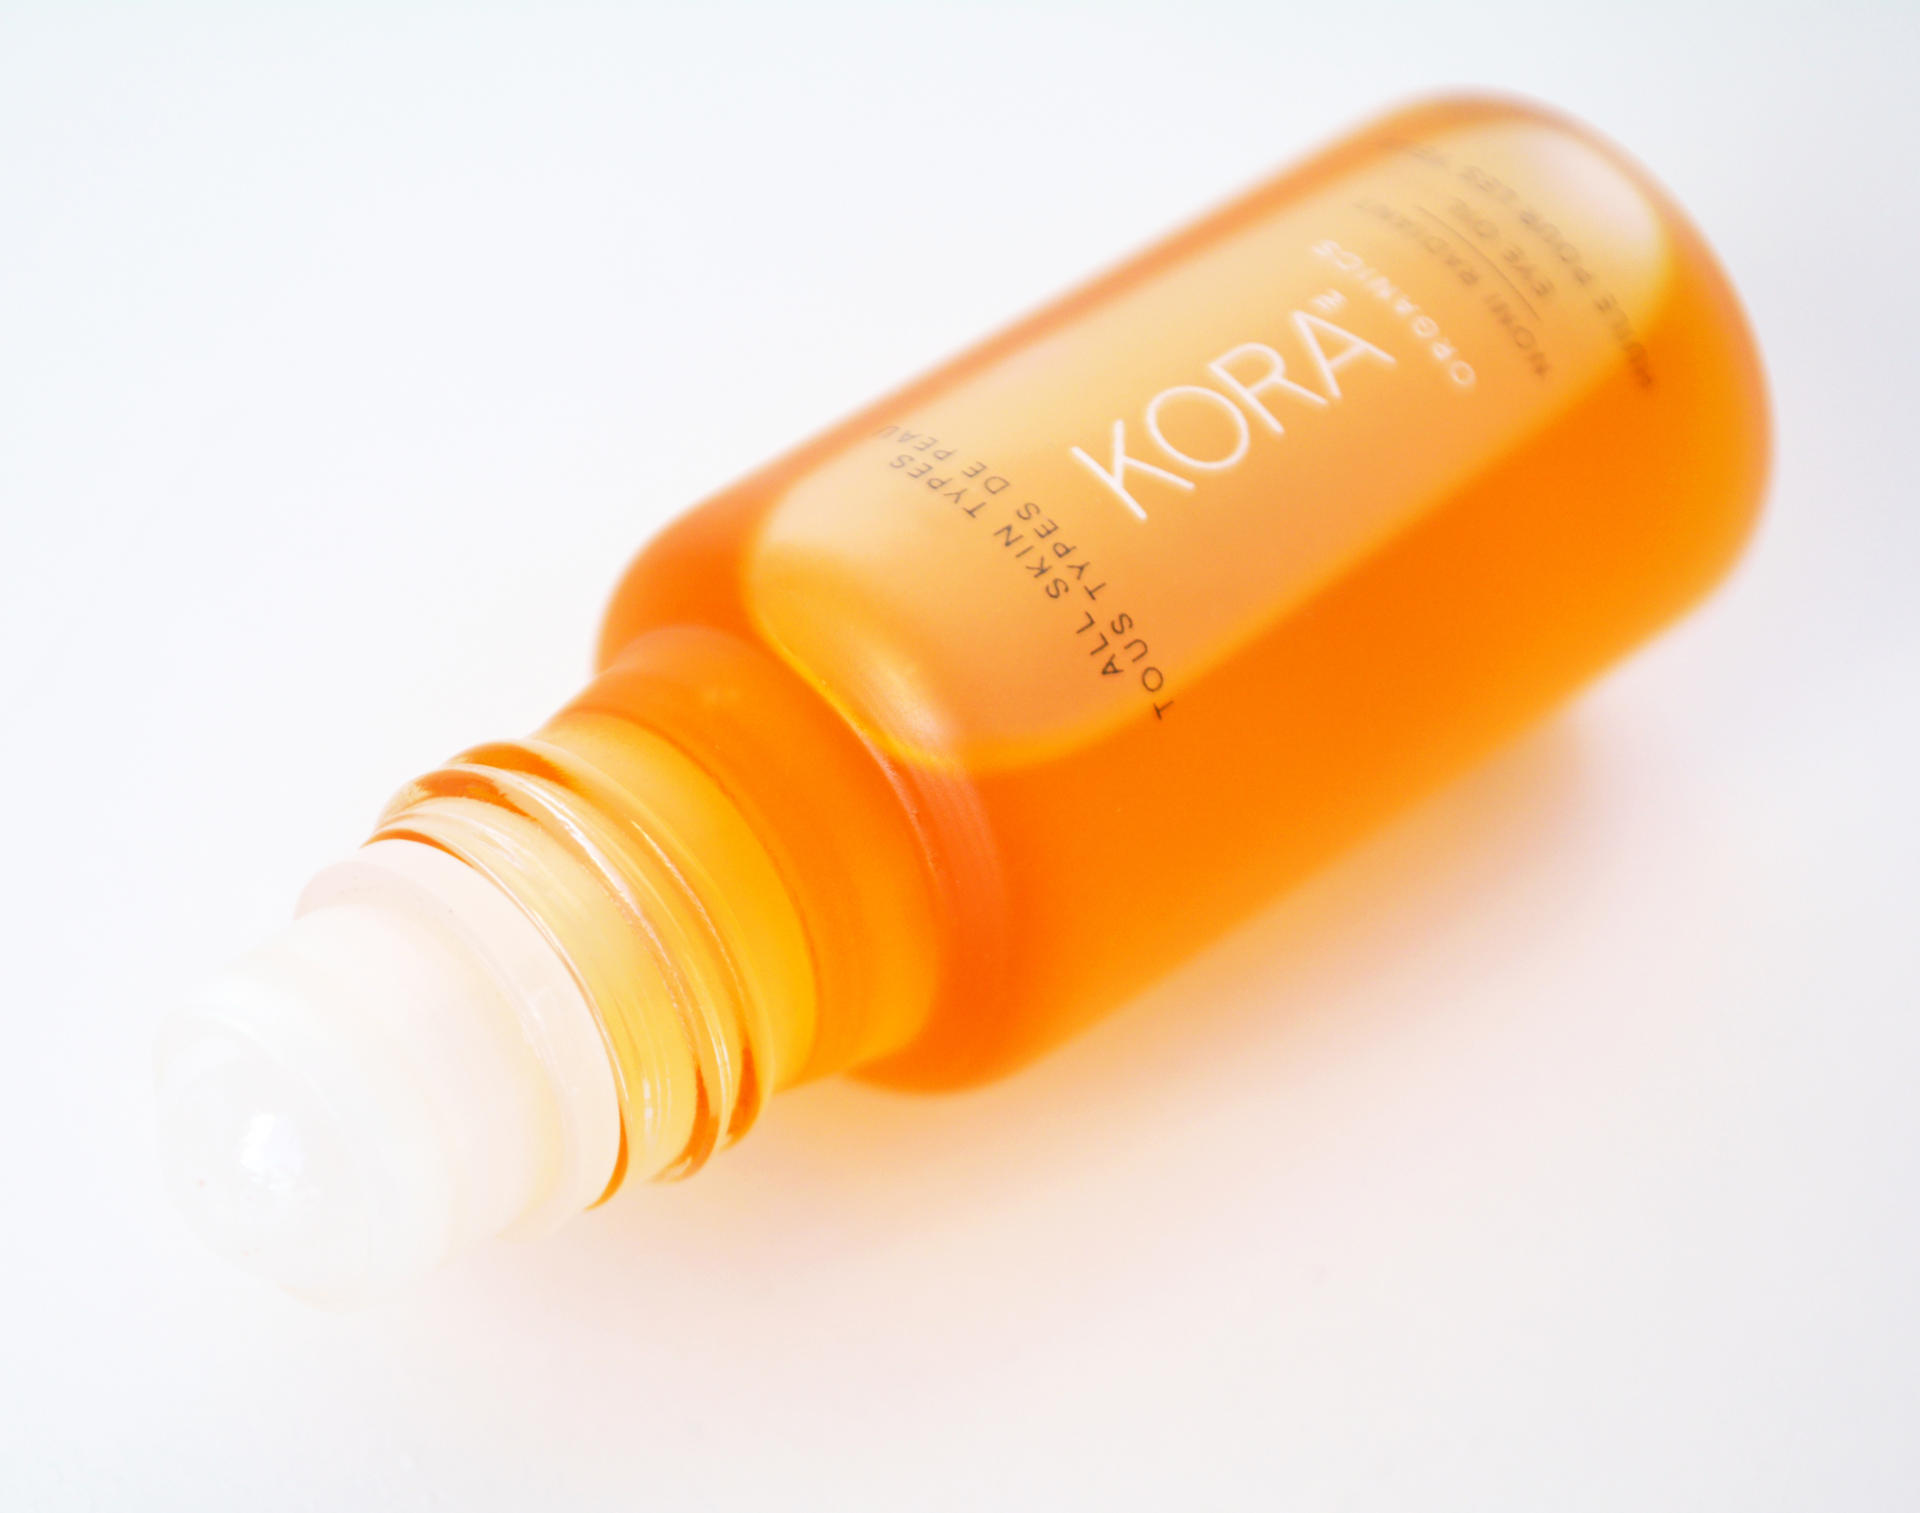 KORA Organics Noni Radiant Eye Oil